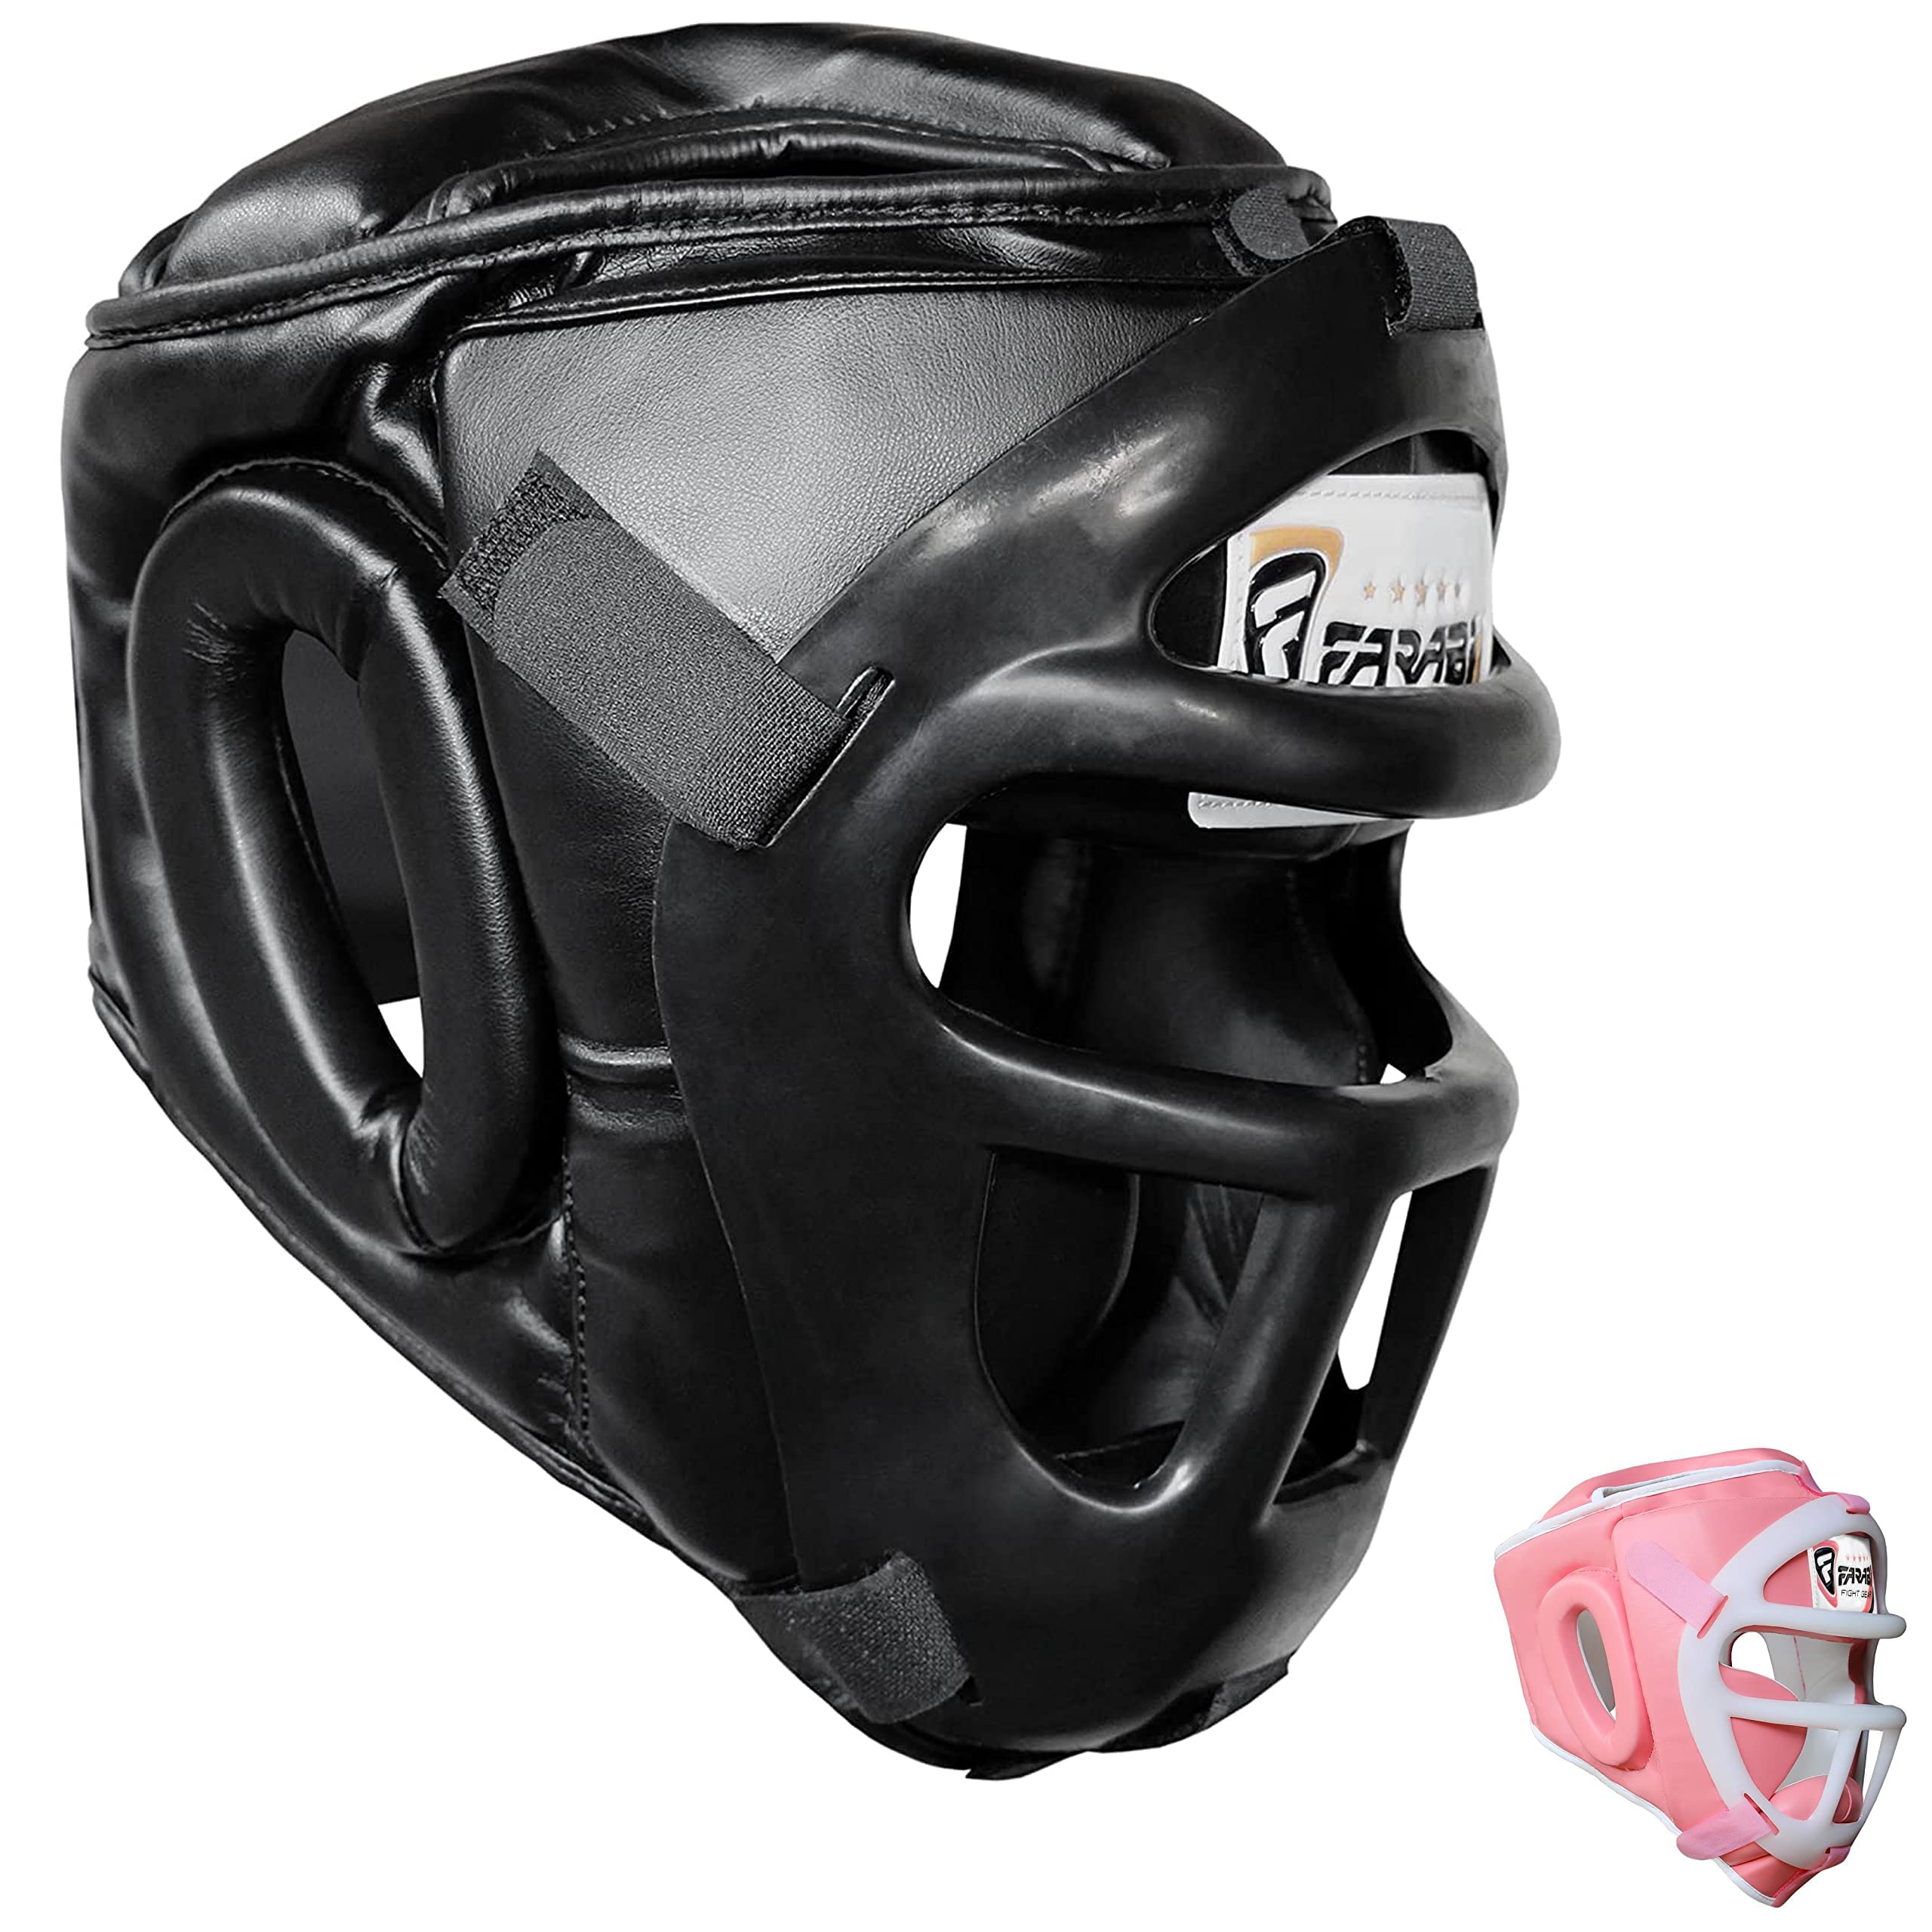 Farabi Sports Boxing HeadGuard, Helmet Head prototector Gear Real Leather (Small) (Black, Medium)